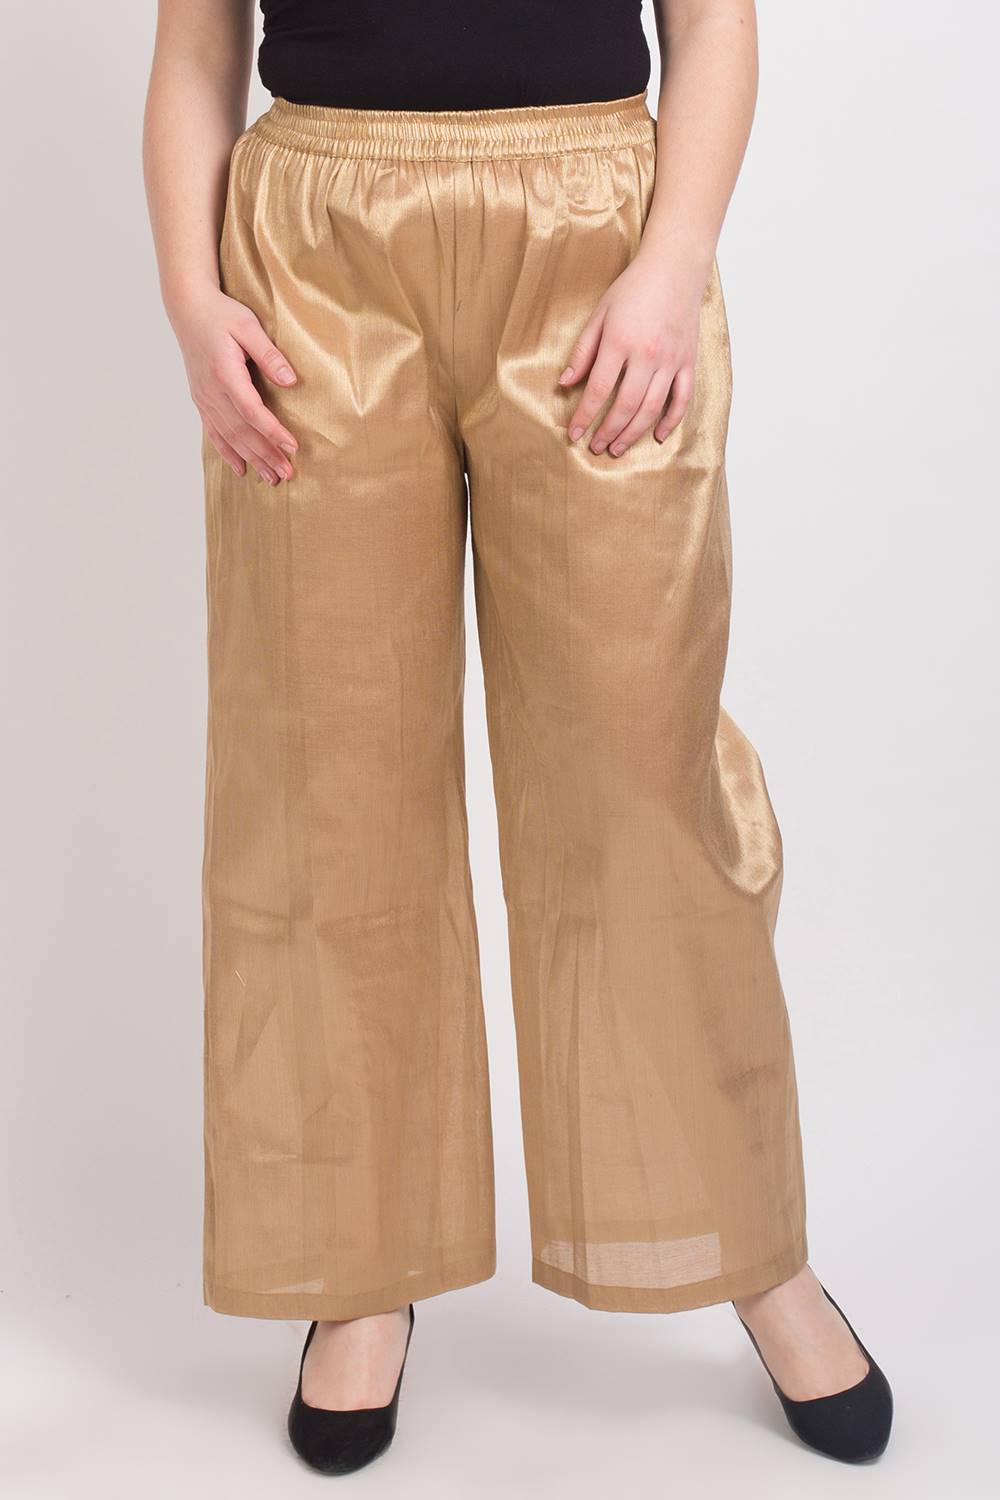 Buy ALAXENDER Wide Leg Pants for Women Elastic High Waist Palazzo Pants  (LEMON) Online at Best Prices in India - JioMart.